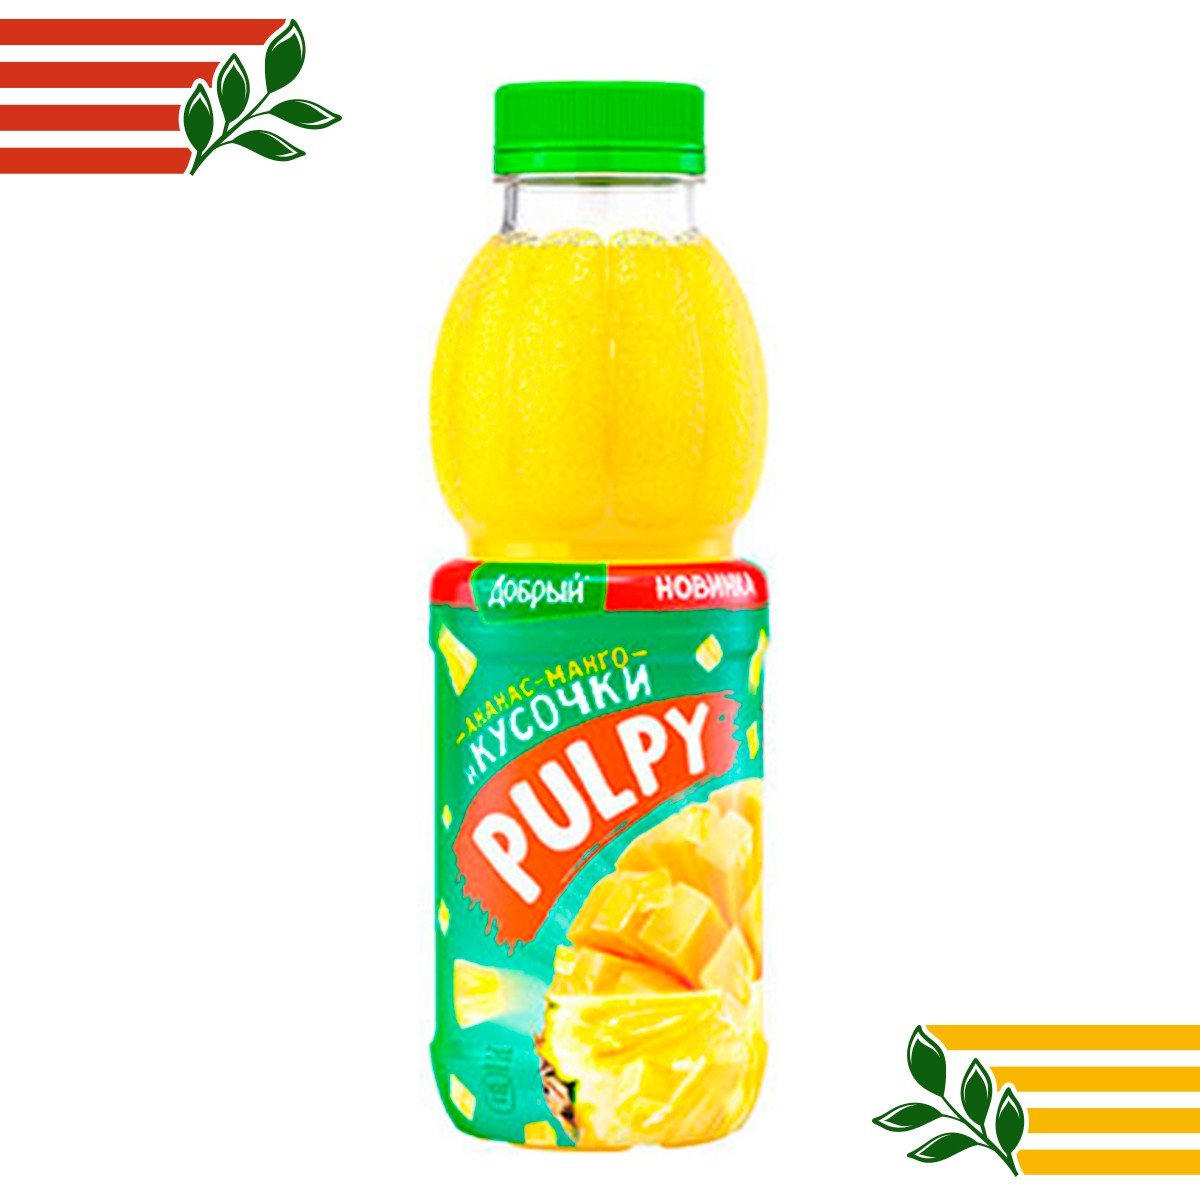 dobry-pulpy-pineapple-05-l